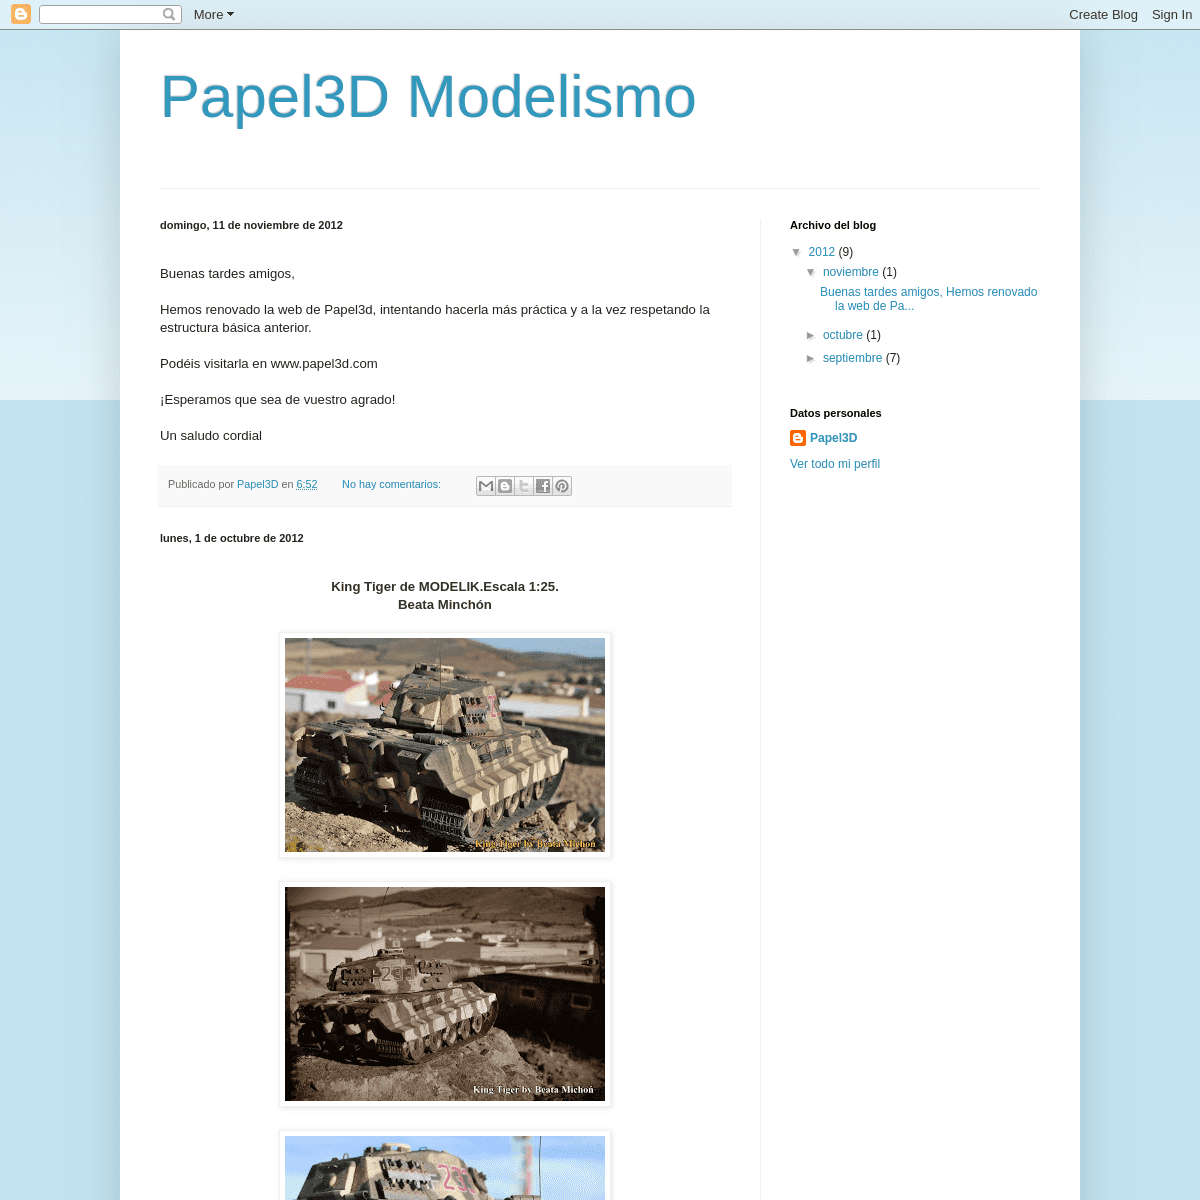 A complete backup of papel3dmodelismo.blogspot.com